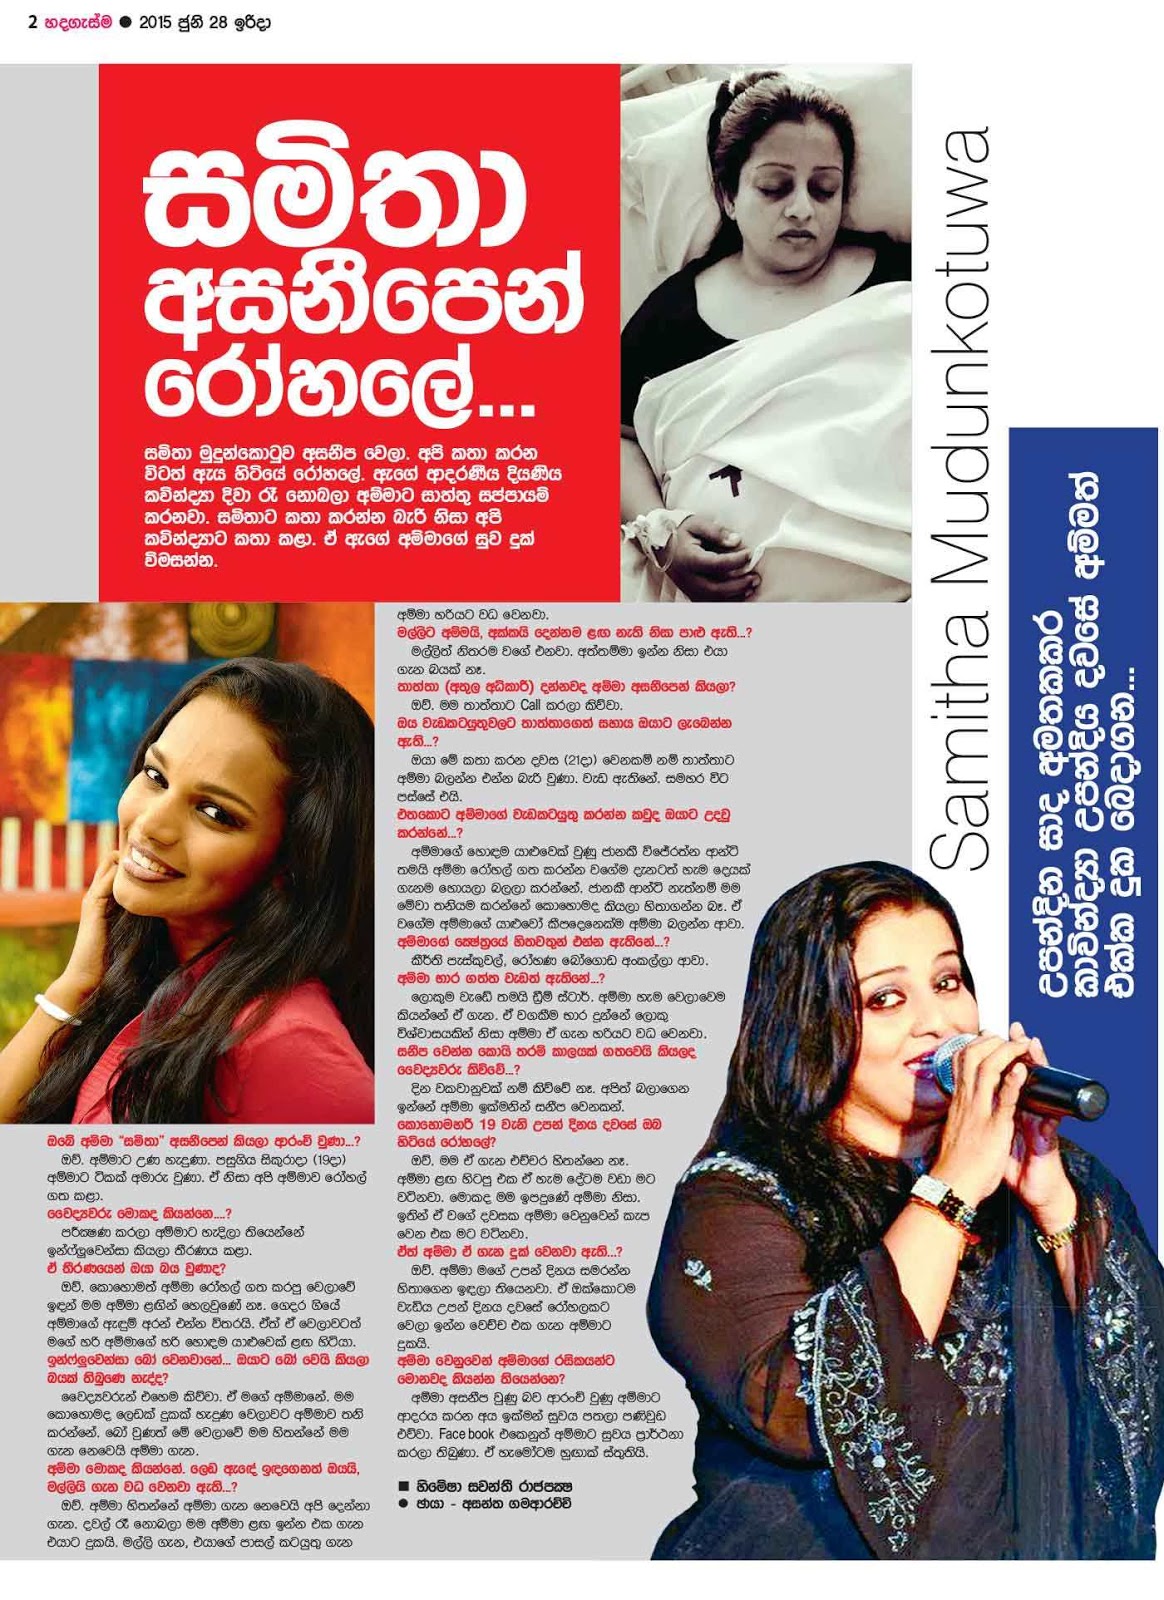 Sri Lanka Newspaper Articles